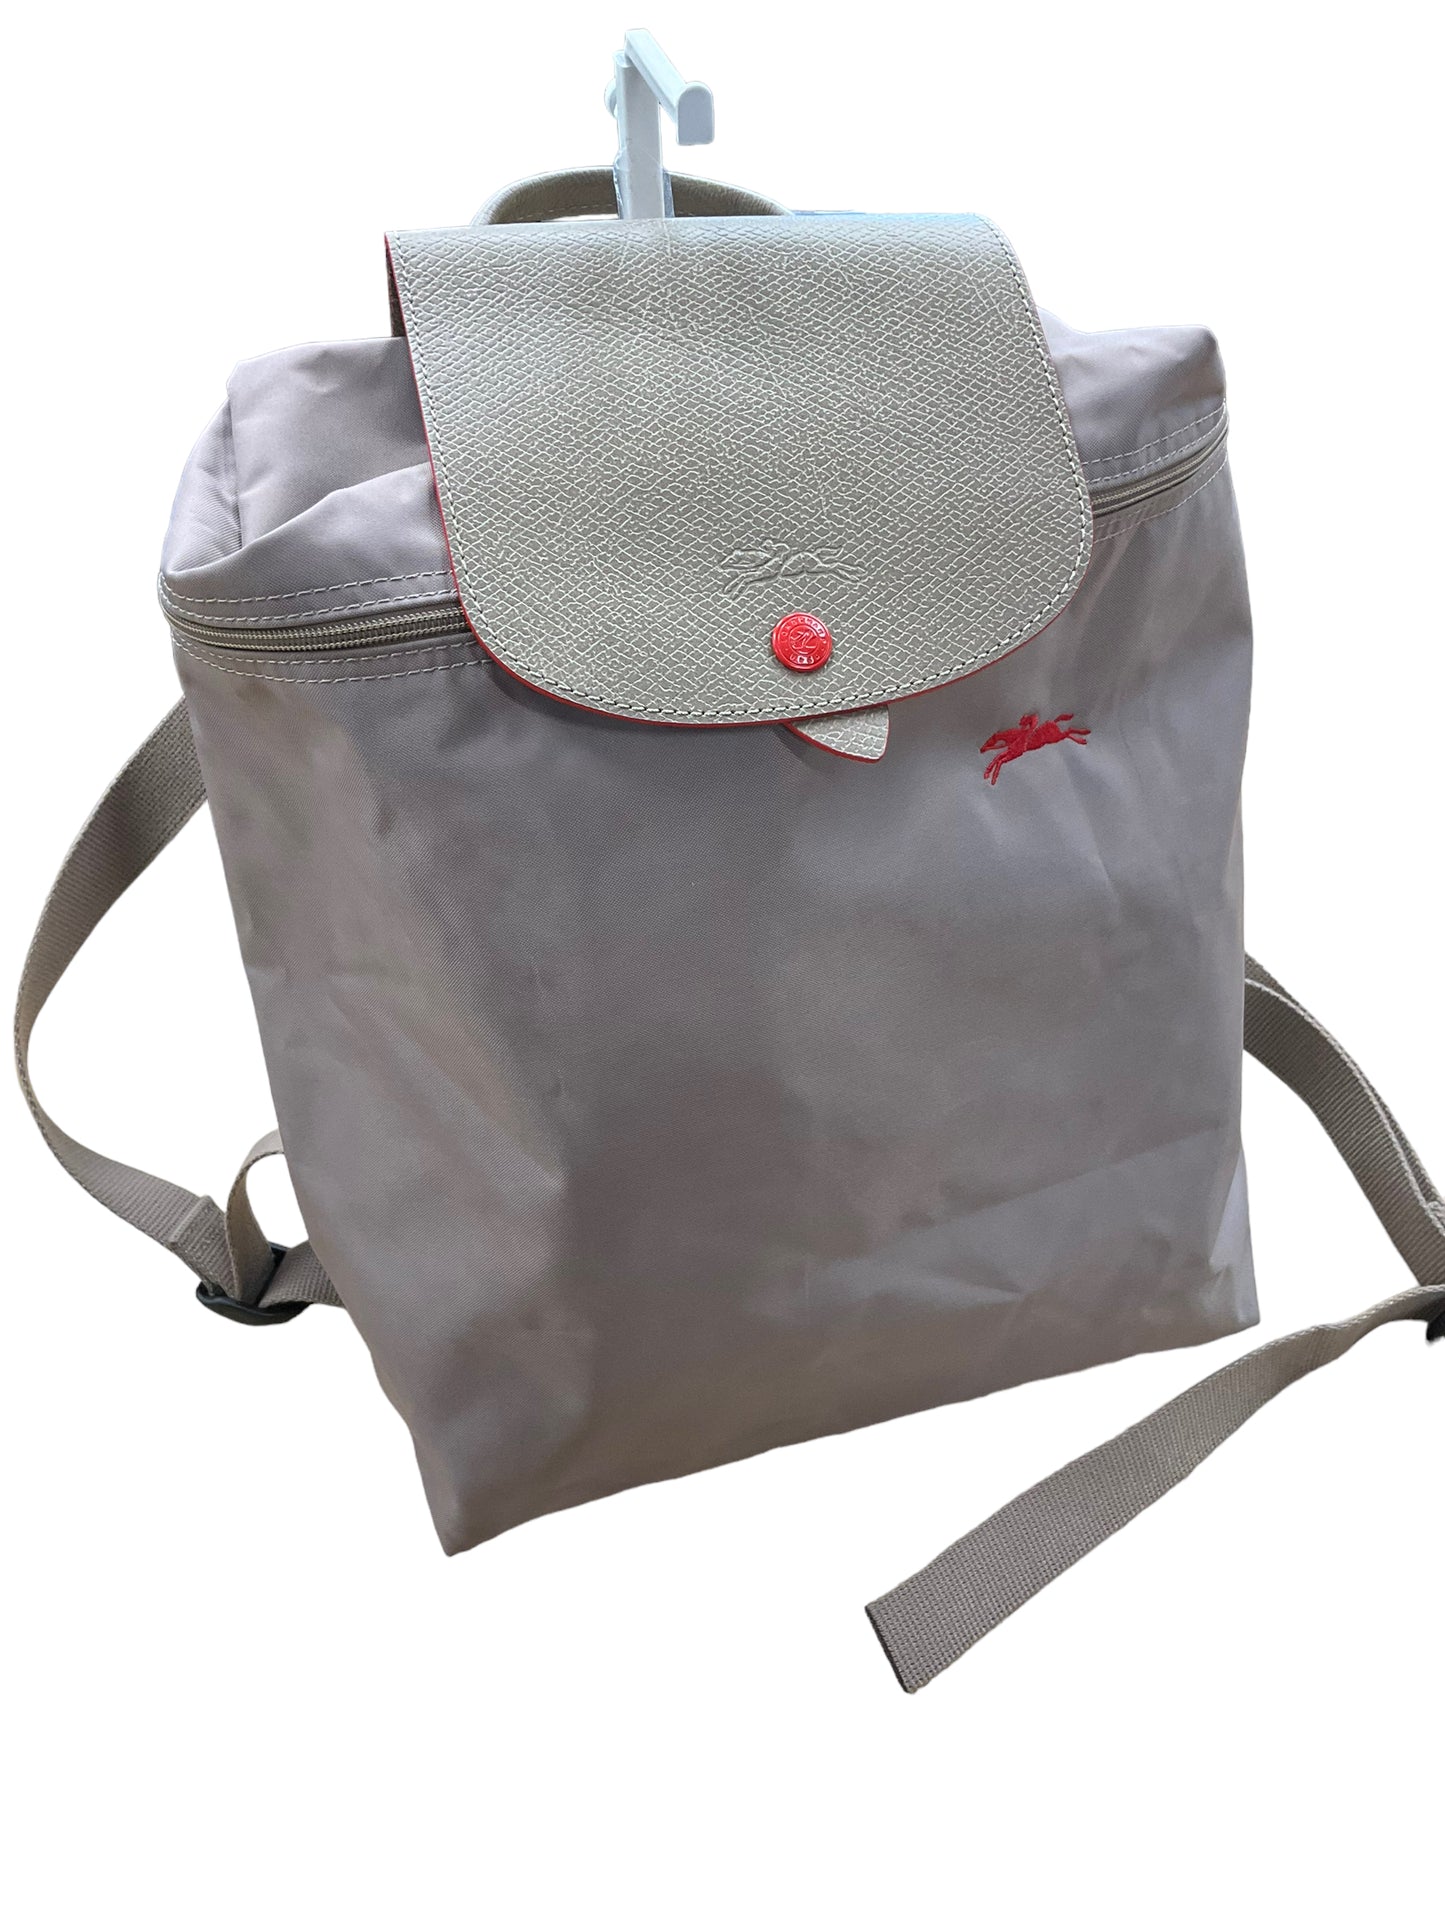 Backpack Designer By Longchamp  Size: Medium